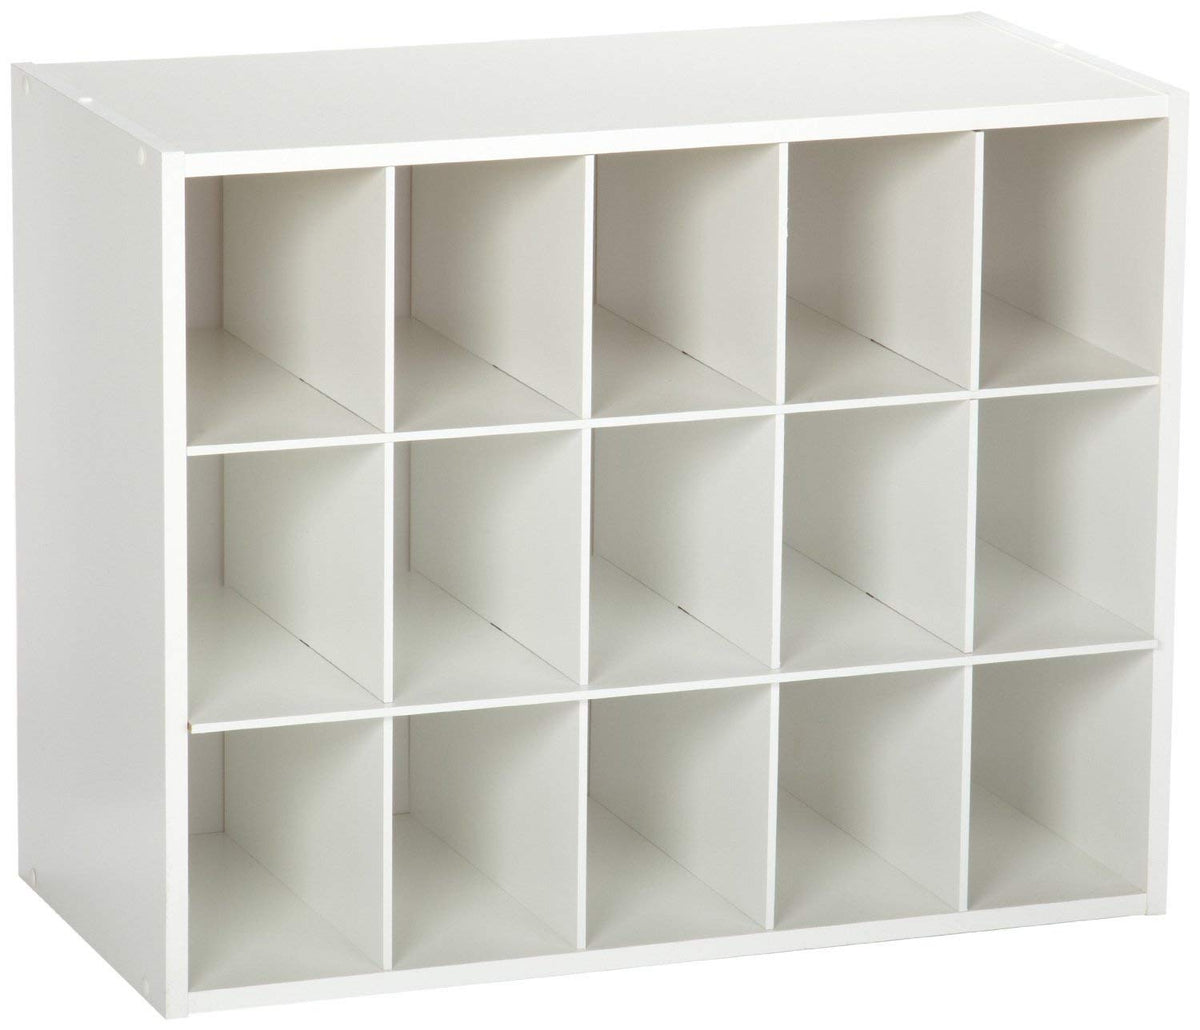 ClosetMaid 898300 Stackable Storage Organizer, 15-Cube, White